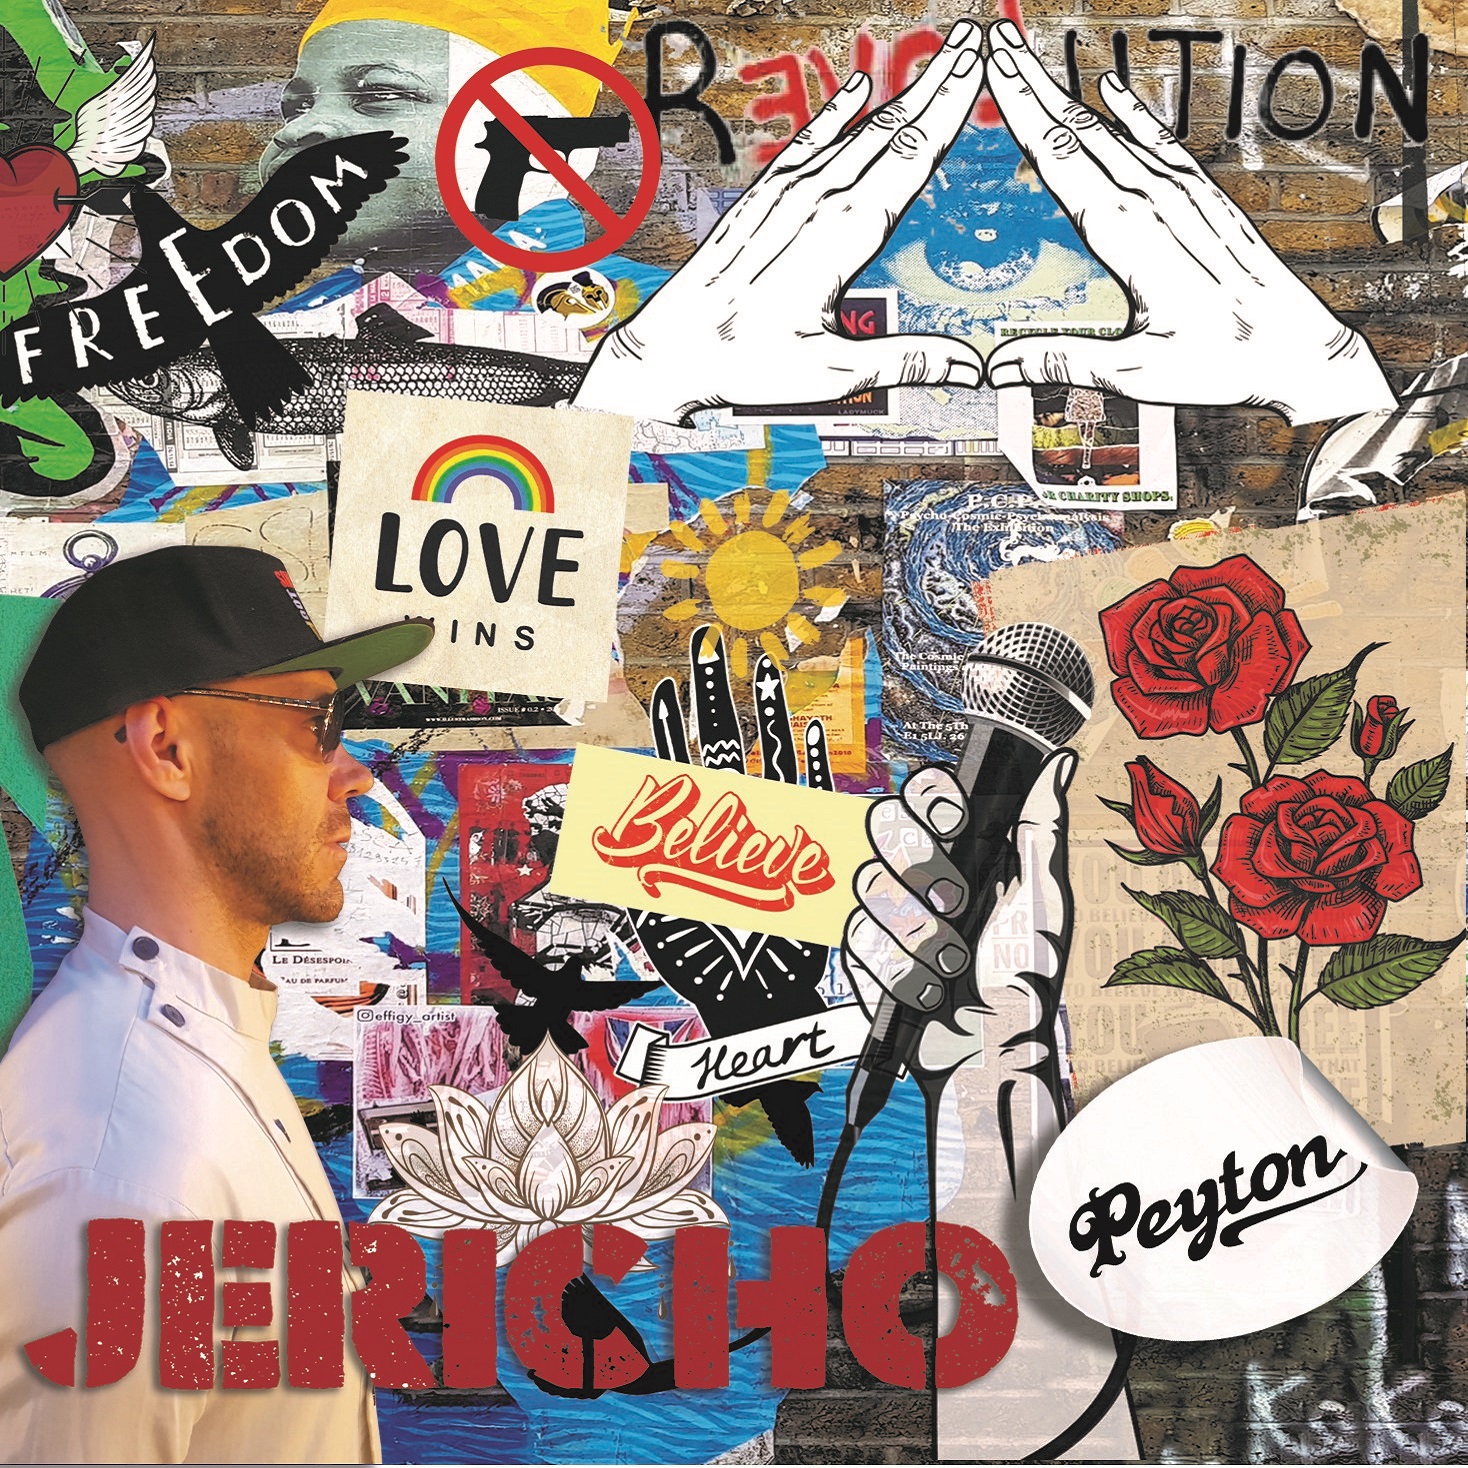 Jericho [Remixes]